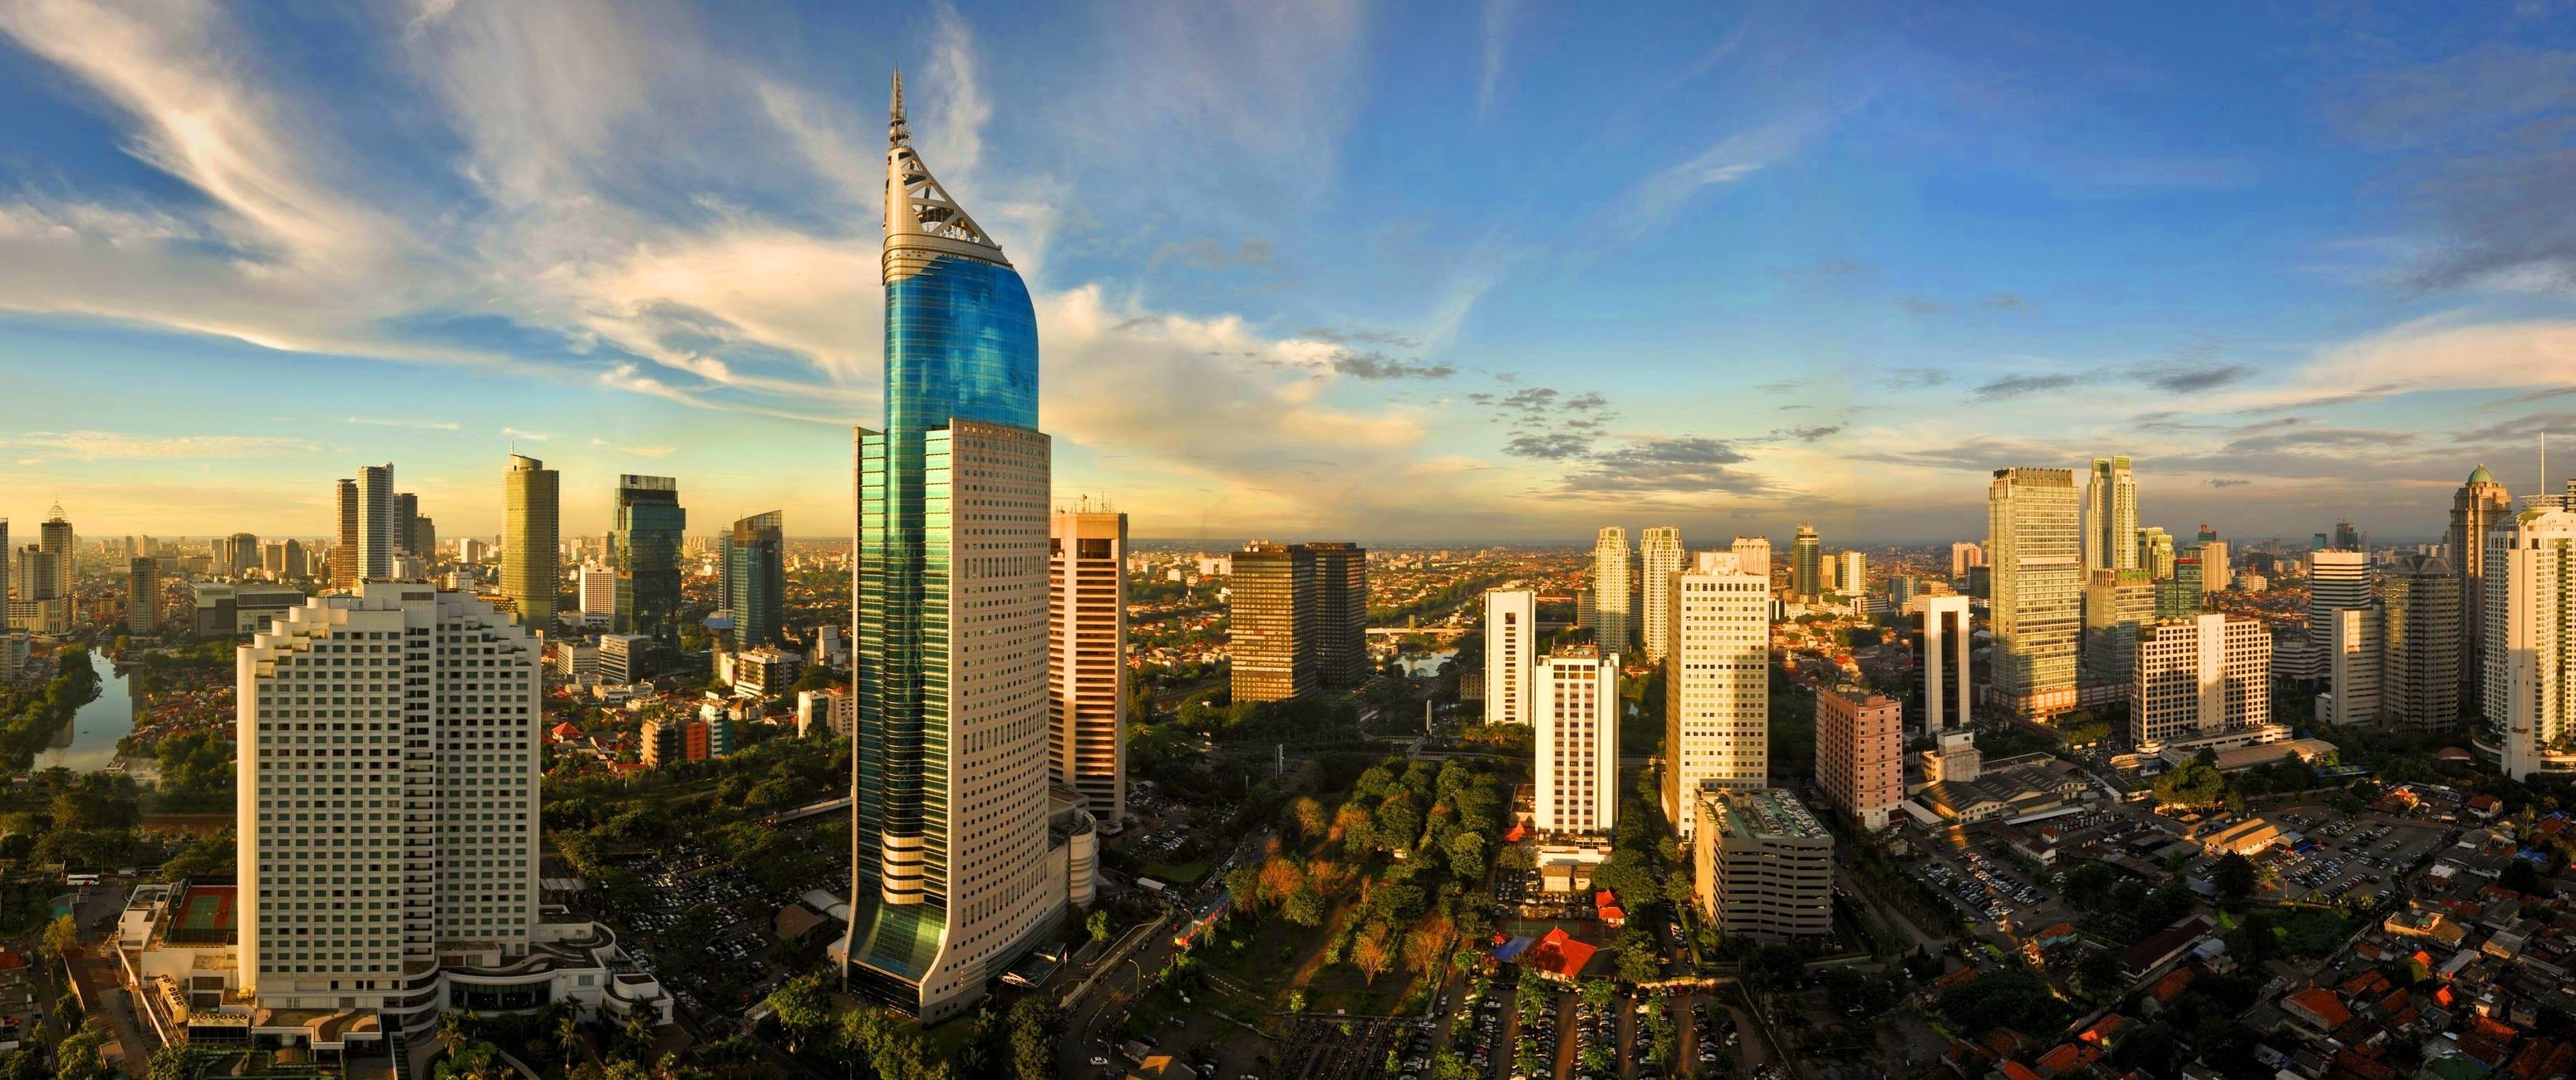 Jakarta Wallpaper Image